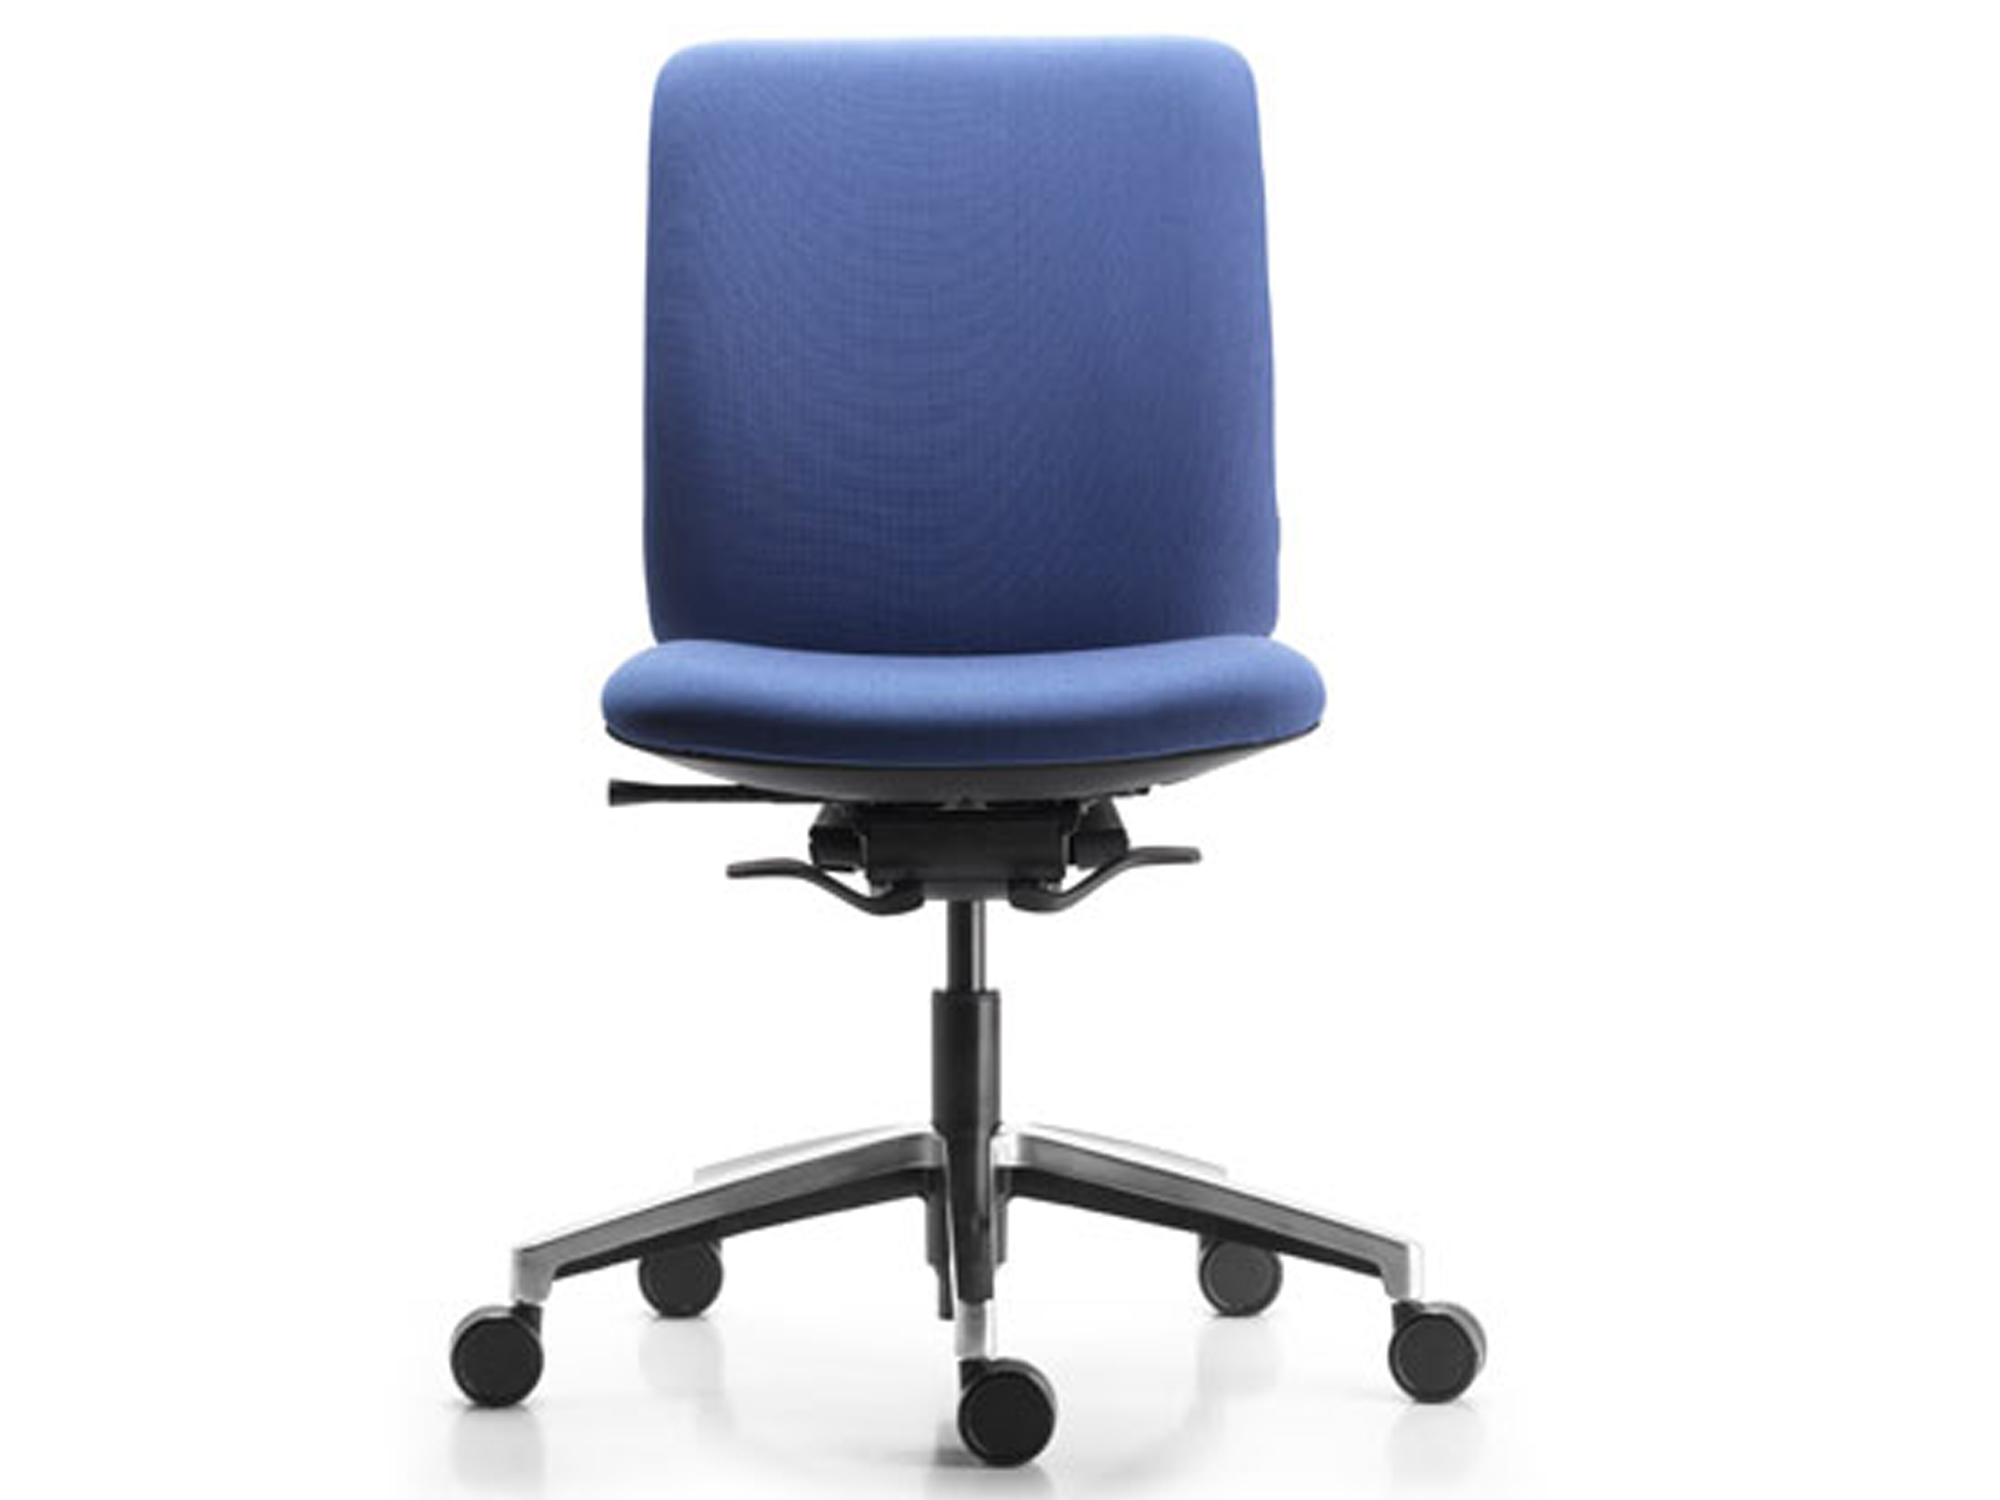 Chair-design-15.jpg